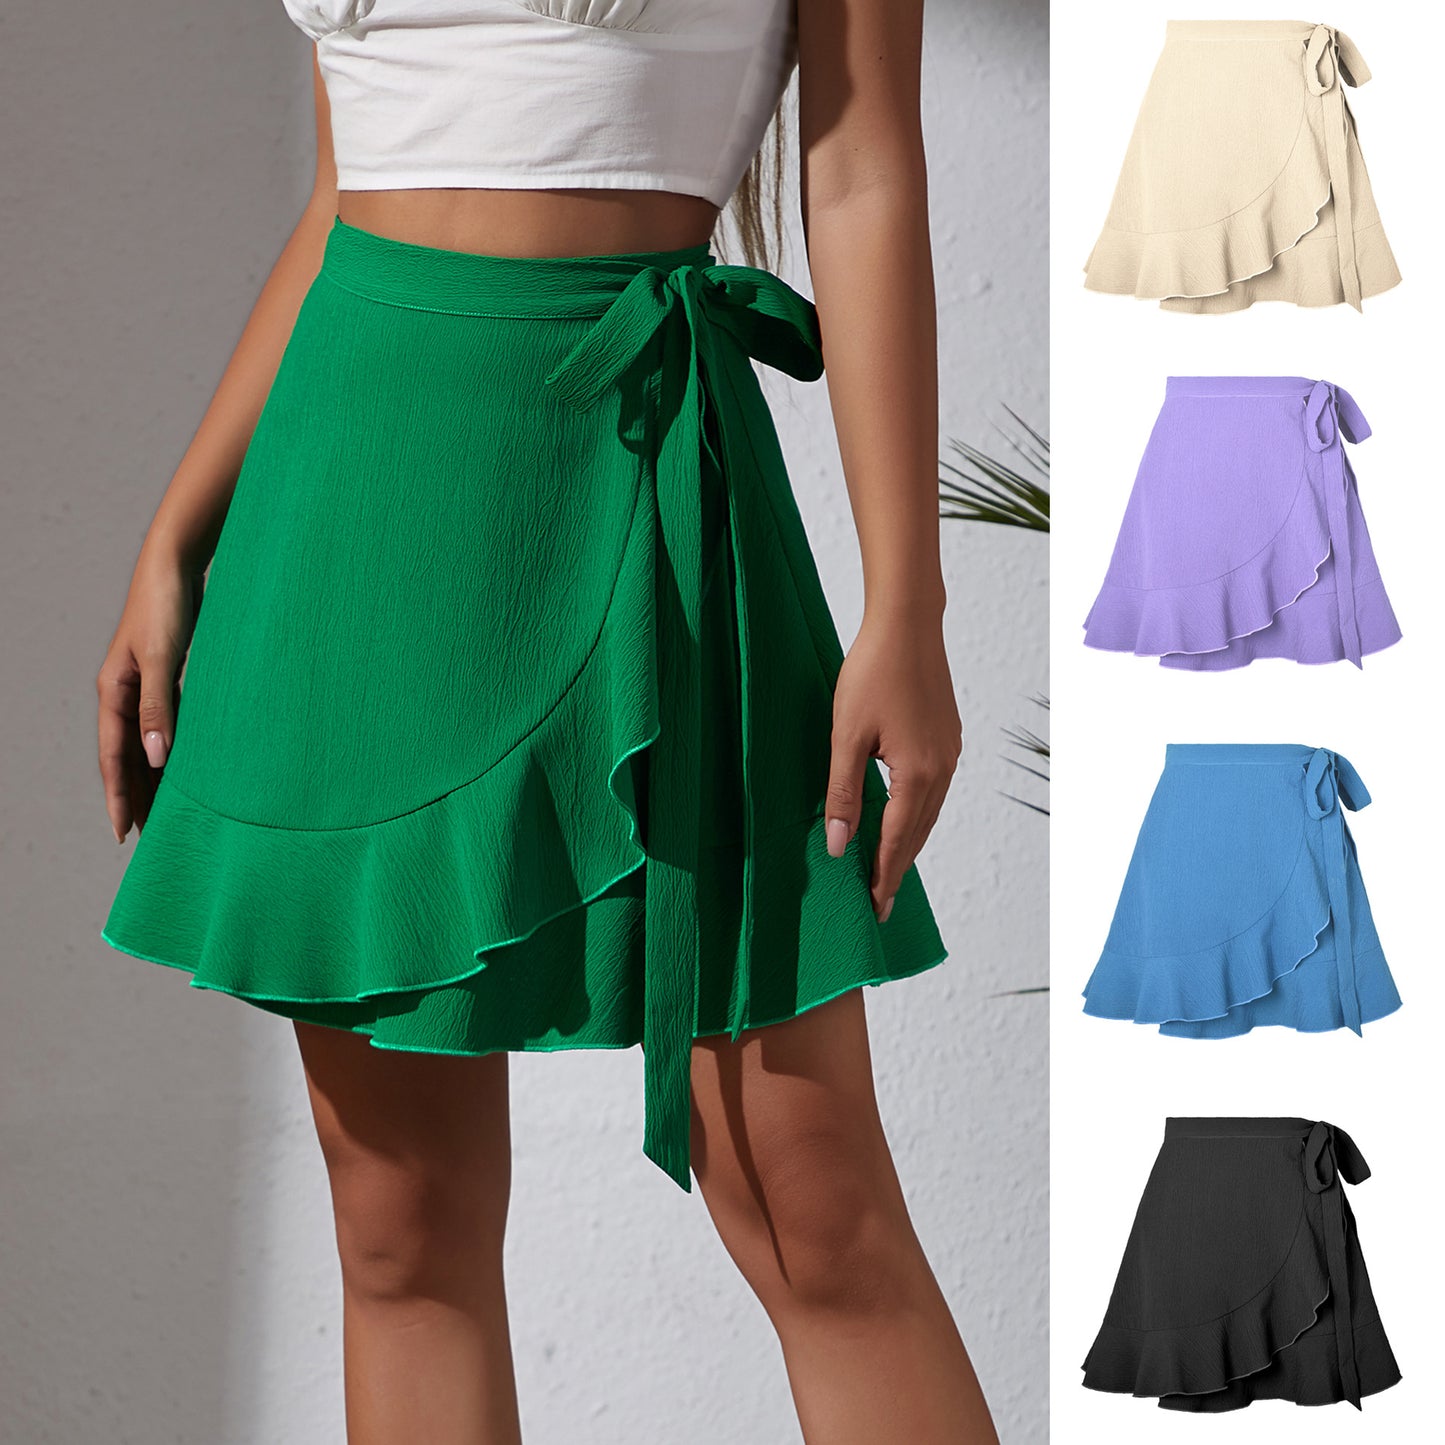 High Waist One-Piece Lace-Up Skirt for Women